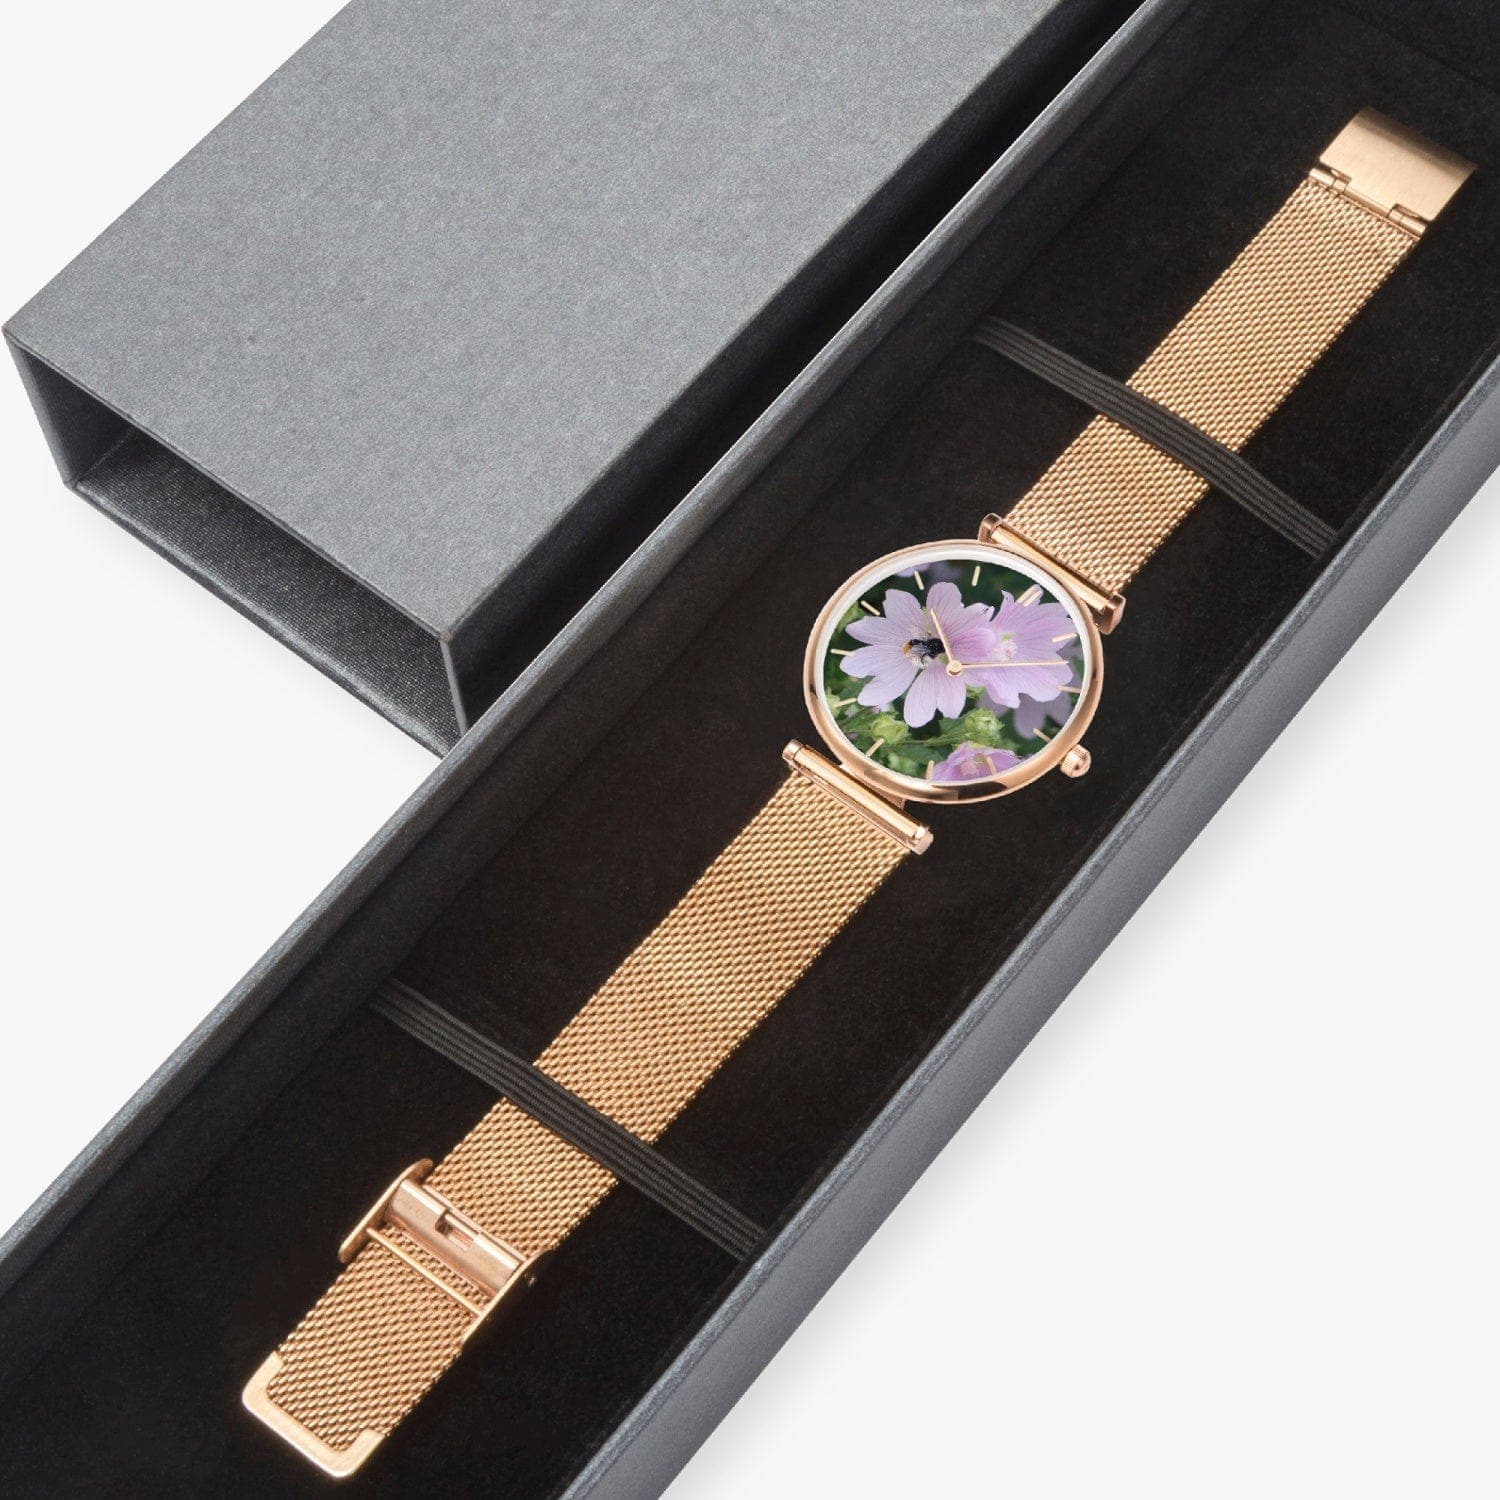 Happy bee. New Stylish Ultra-Thin Quartz Watch. Designer watch by Sensus Studio Design